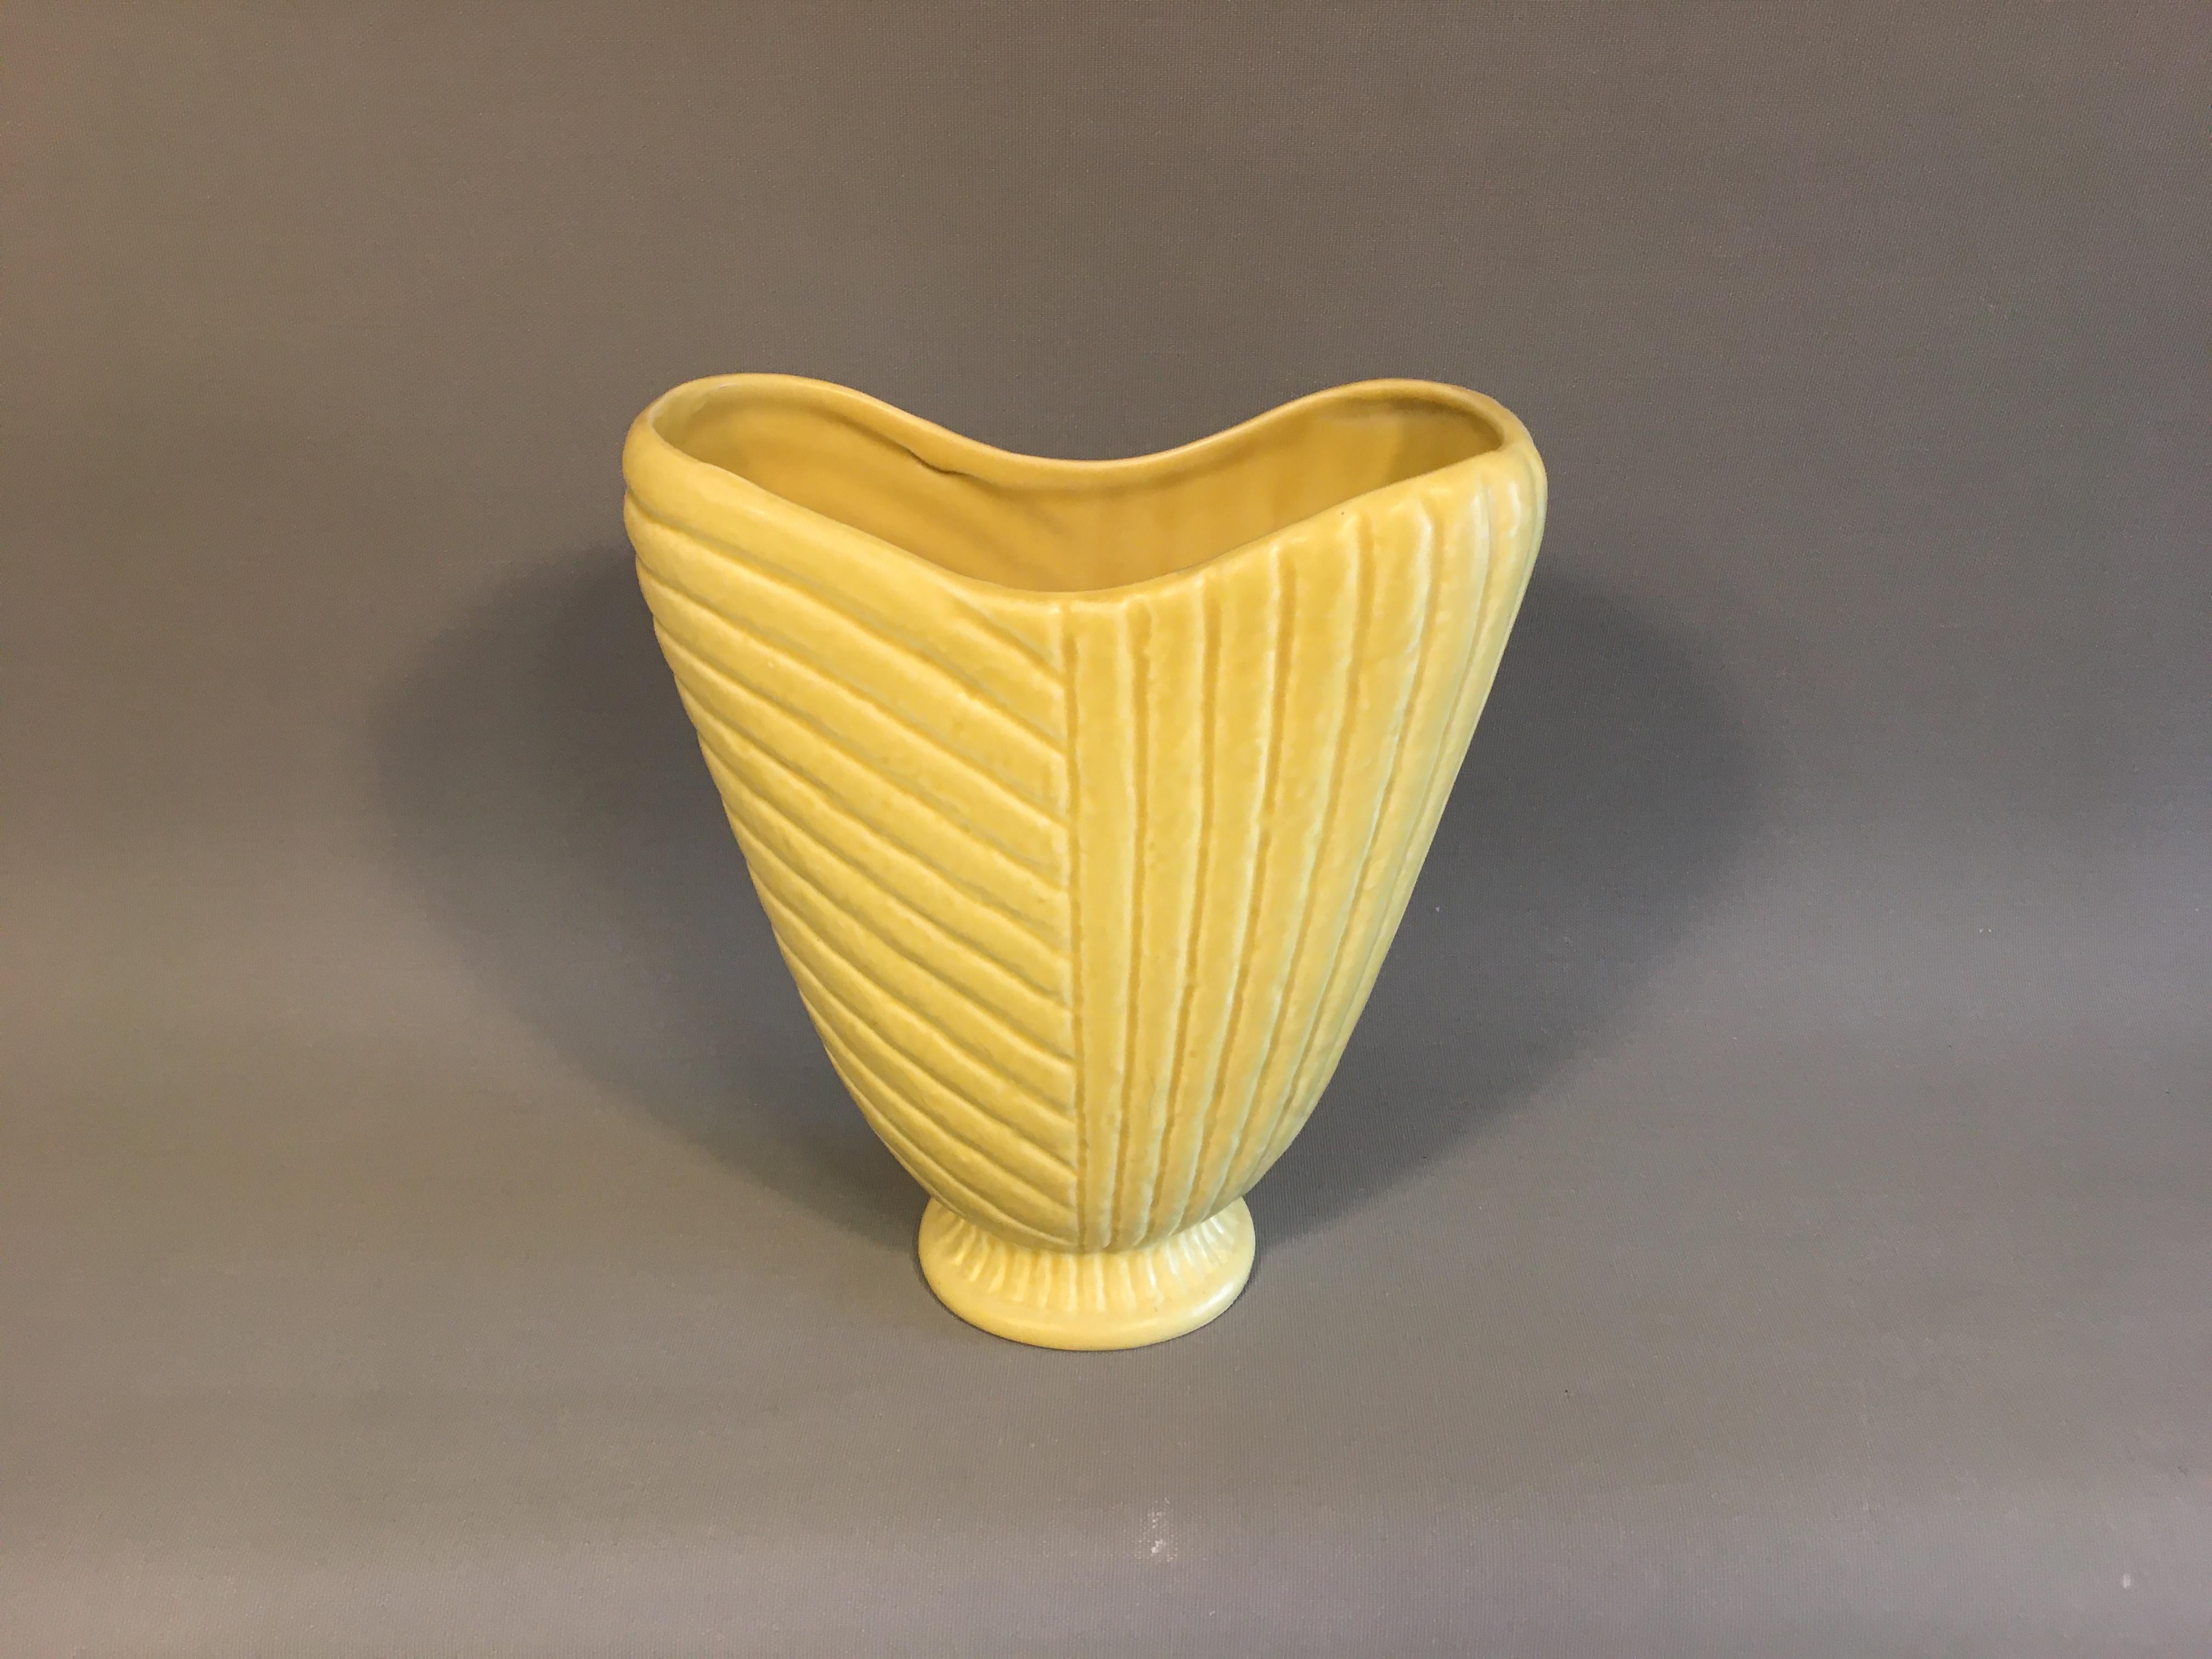 Beautiful delicate yellow ceramic vase from Rörstrand, Sweden.
Measures: H 20 cm, W 17 cm.